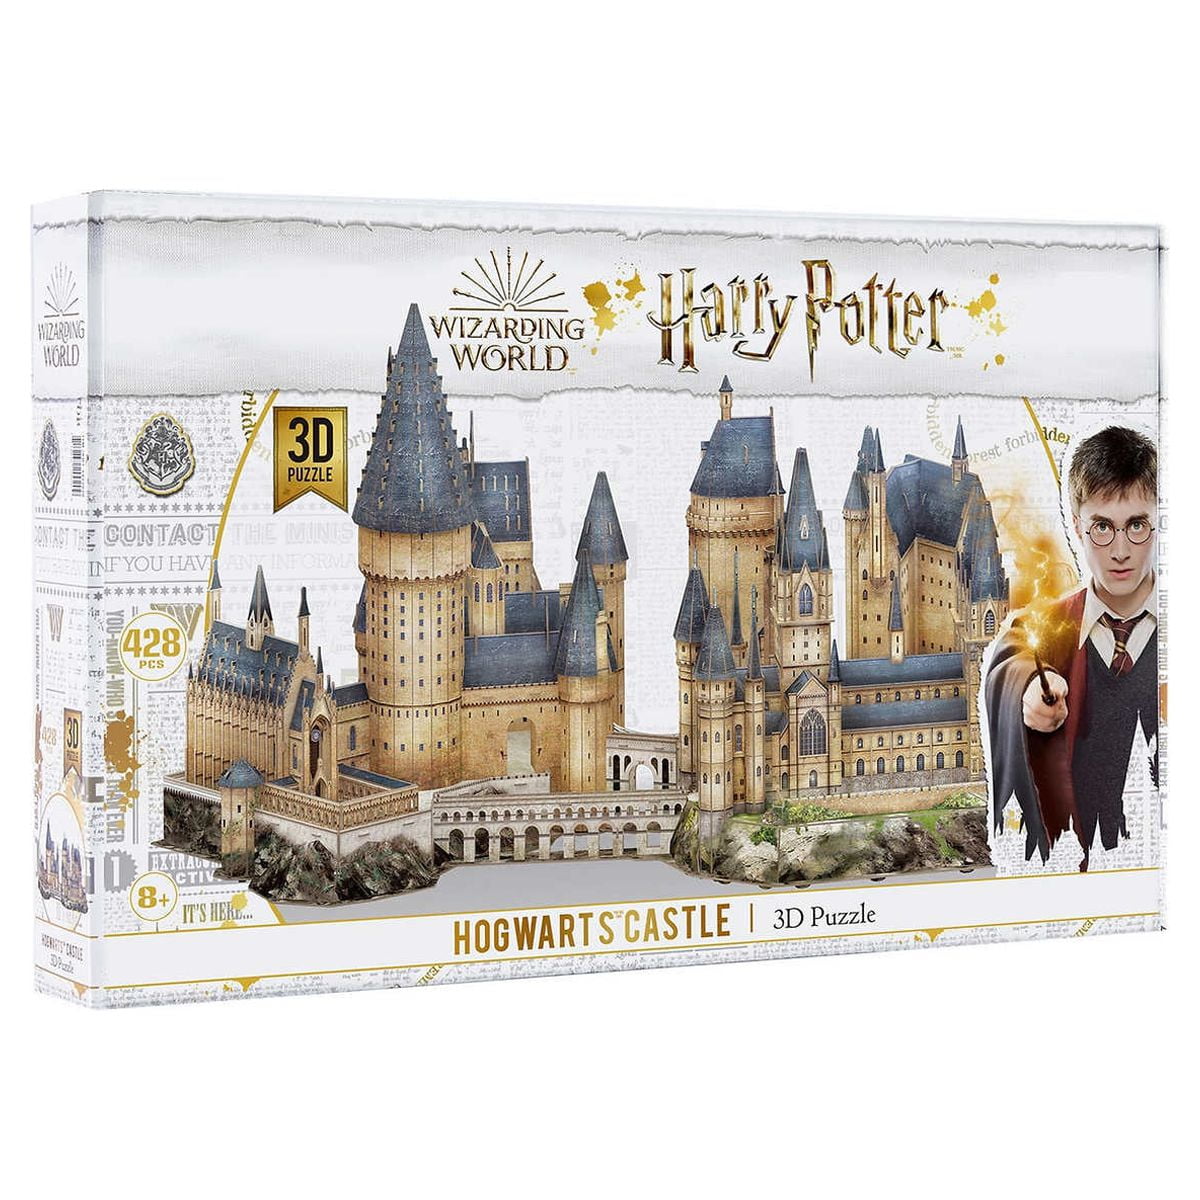 4D Cityscape Harry Potter - Hogwarts Castle Wizarding World 3D